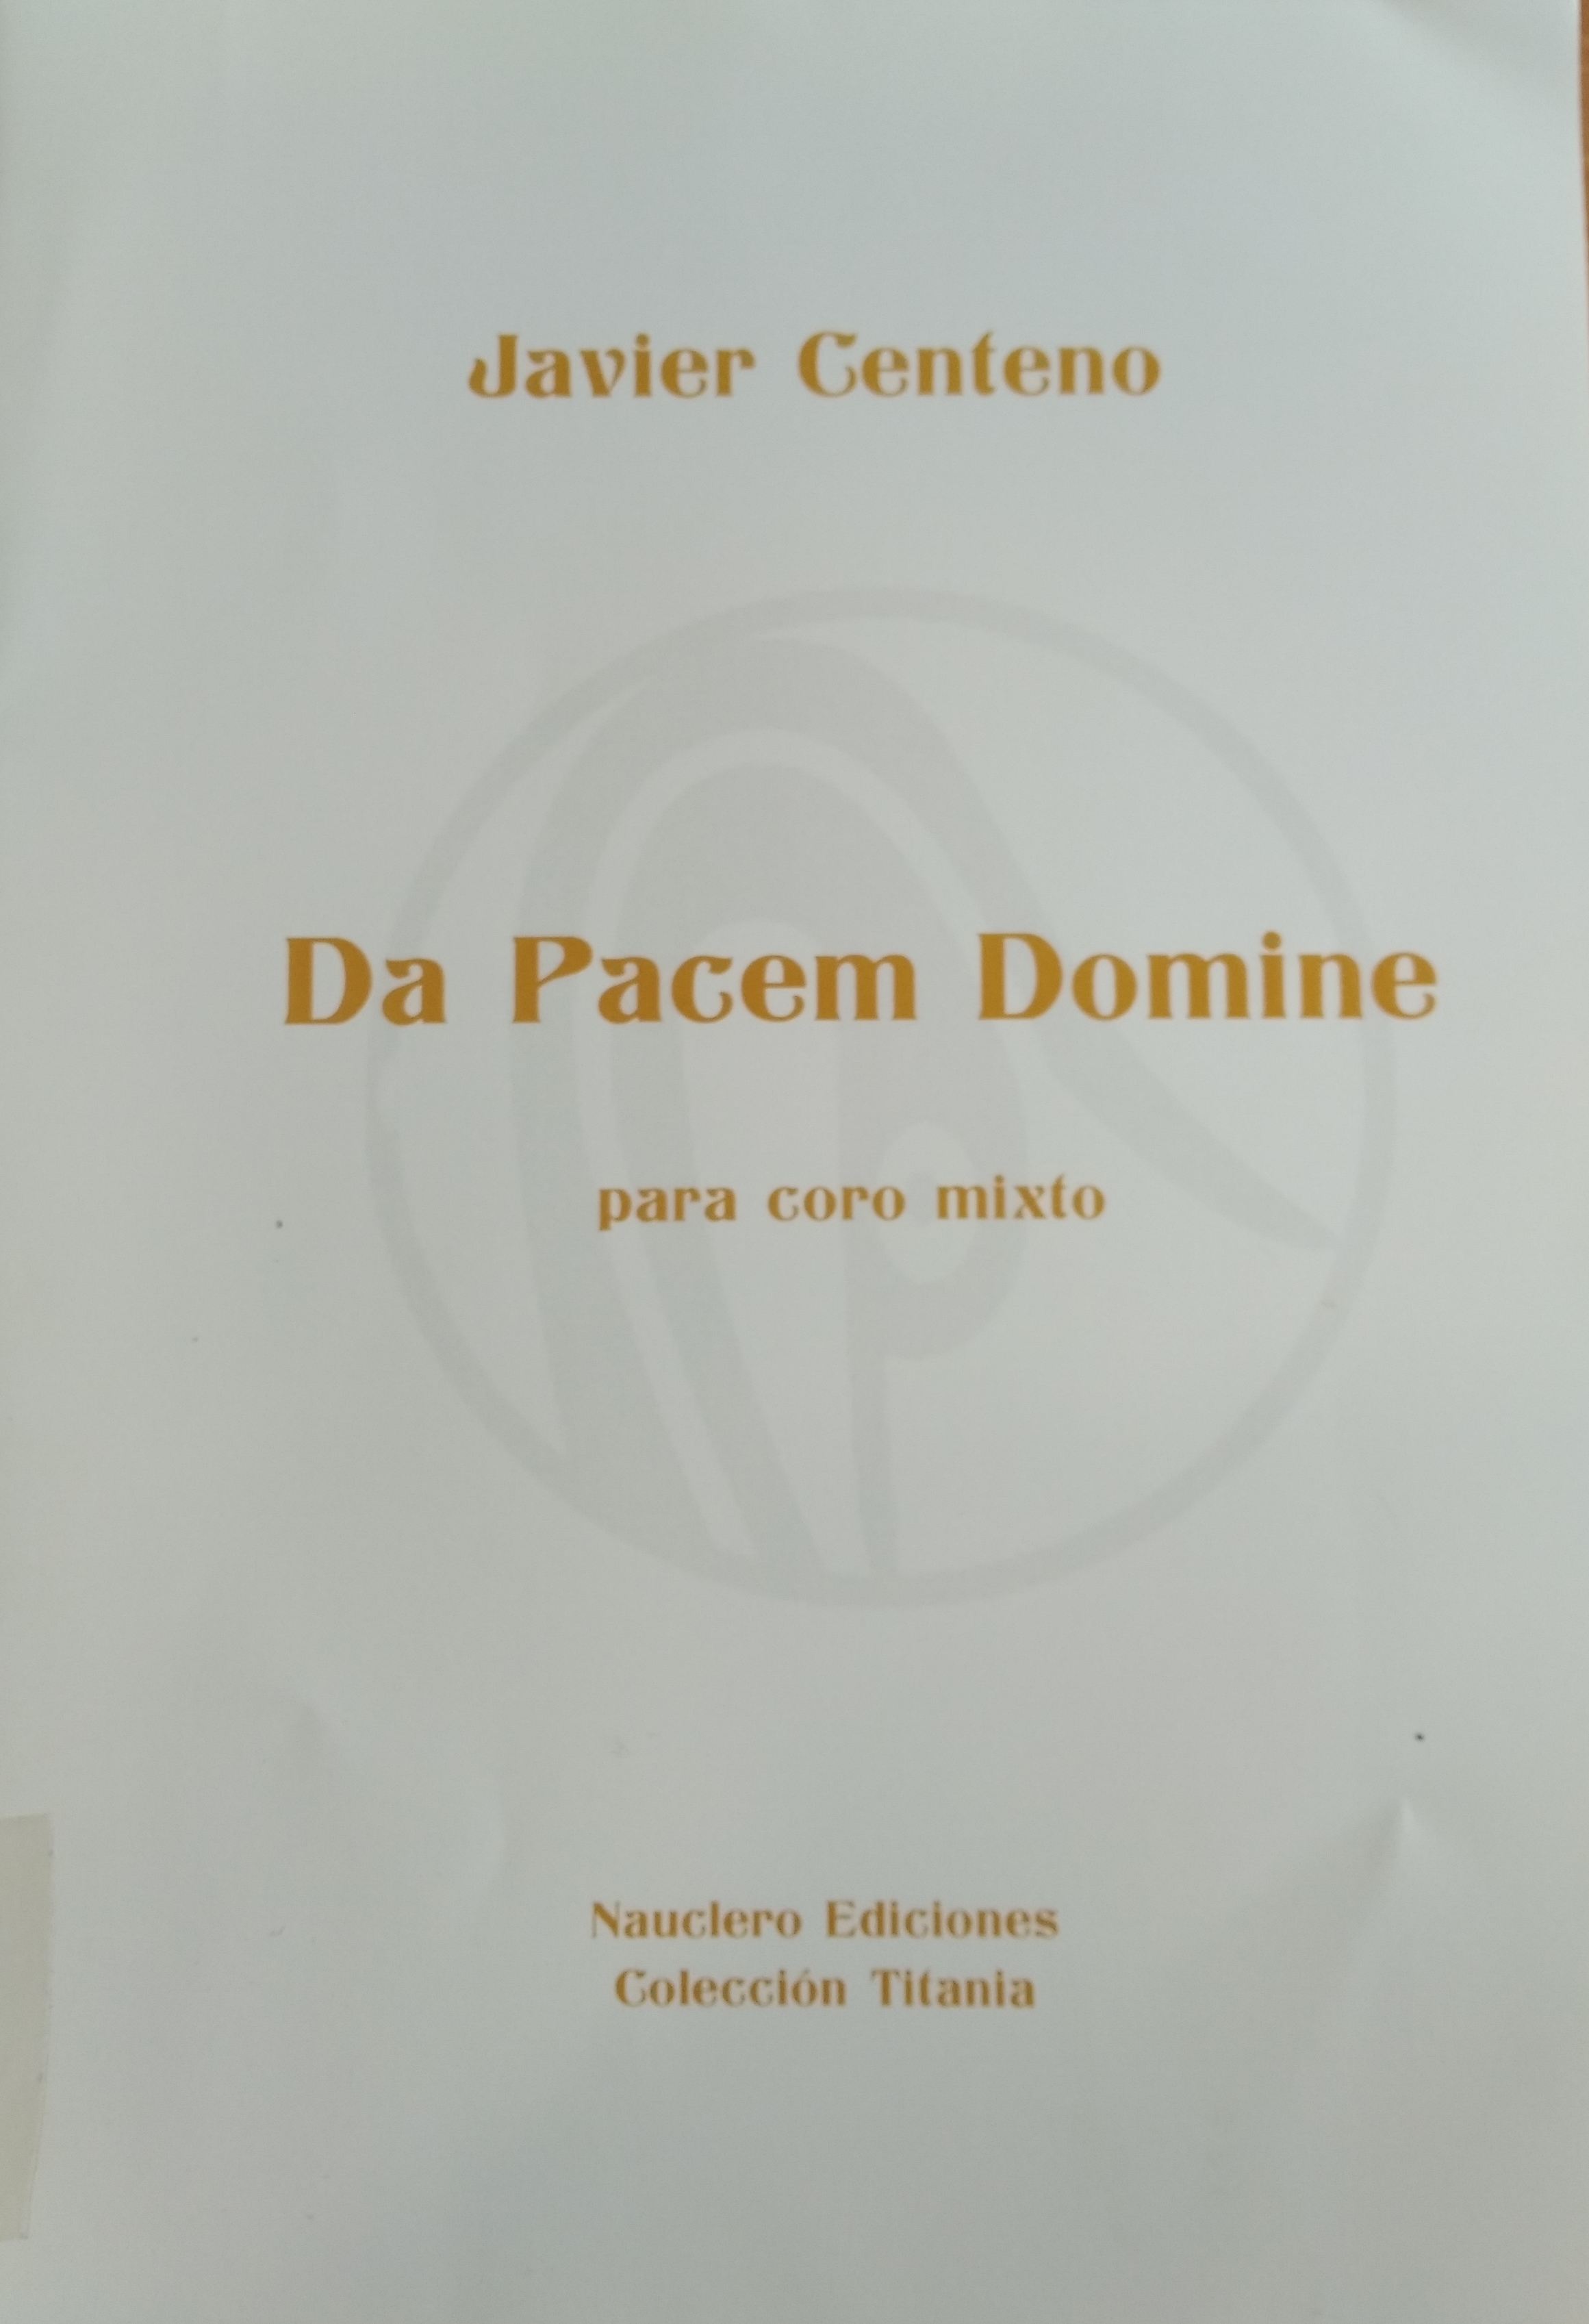 Imagen de portada del libro Da pacem Domine